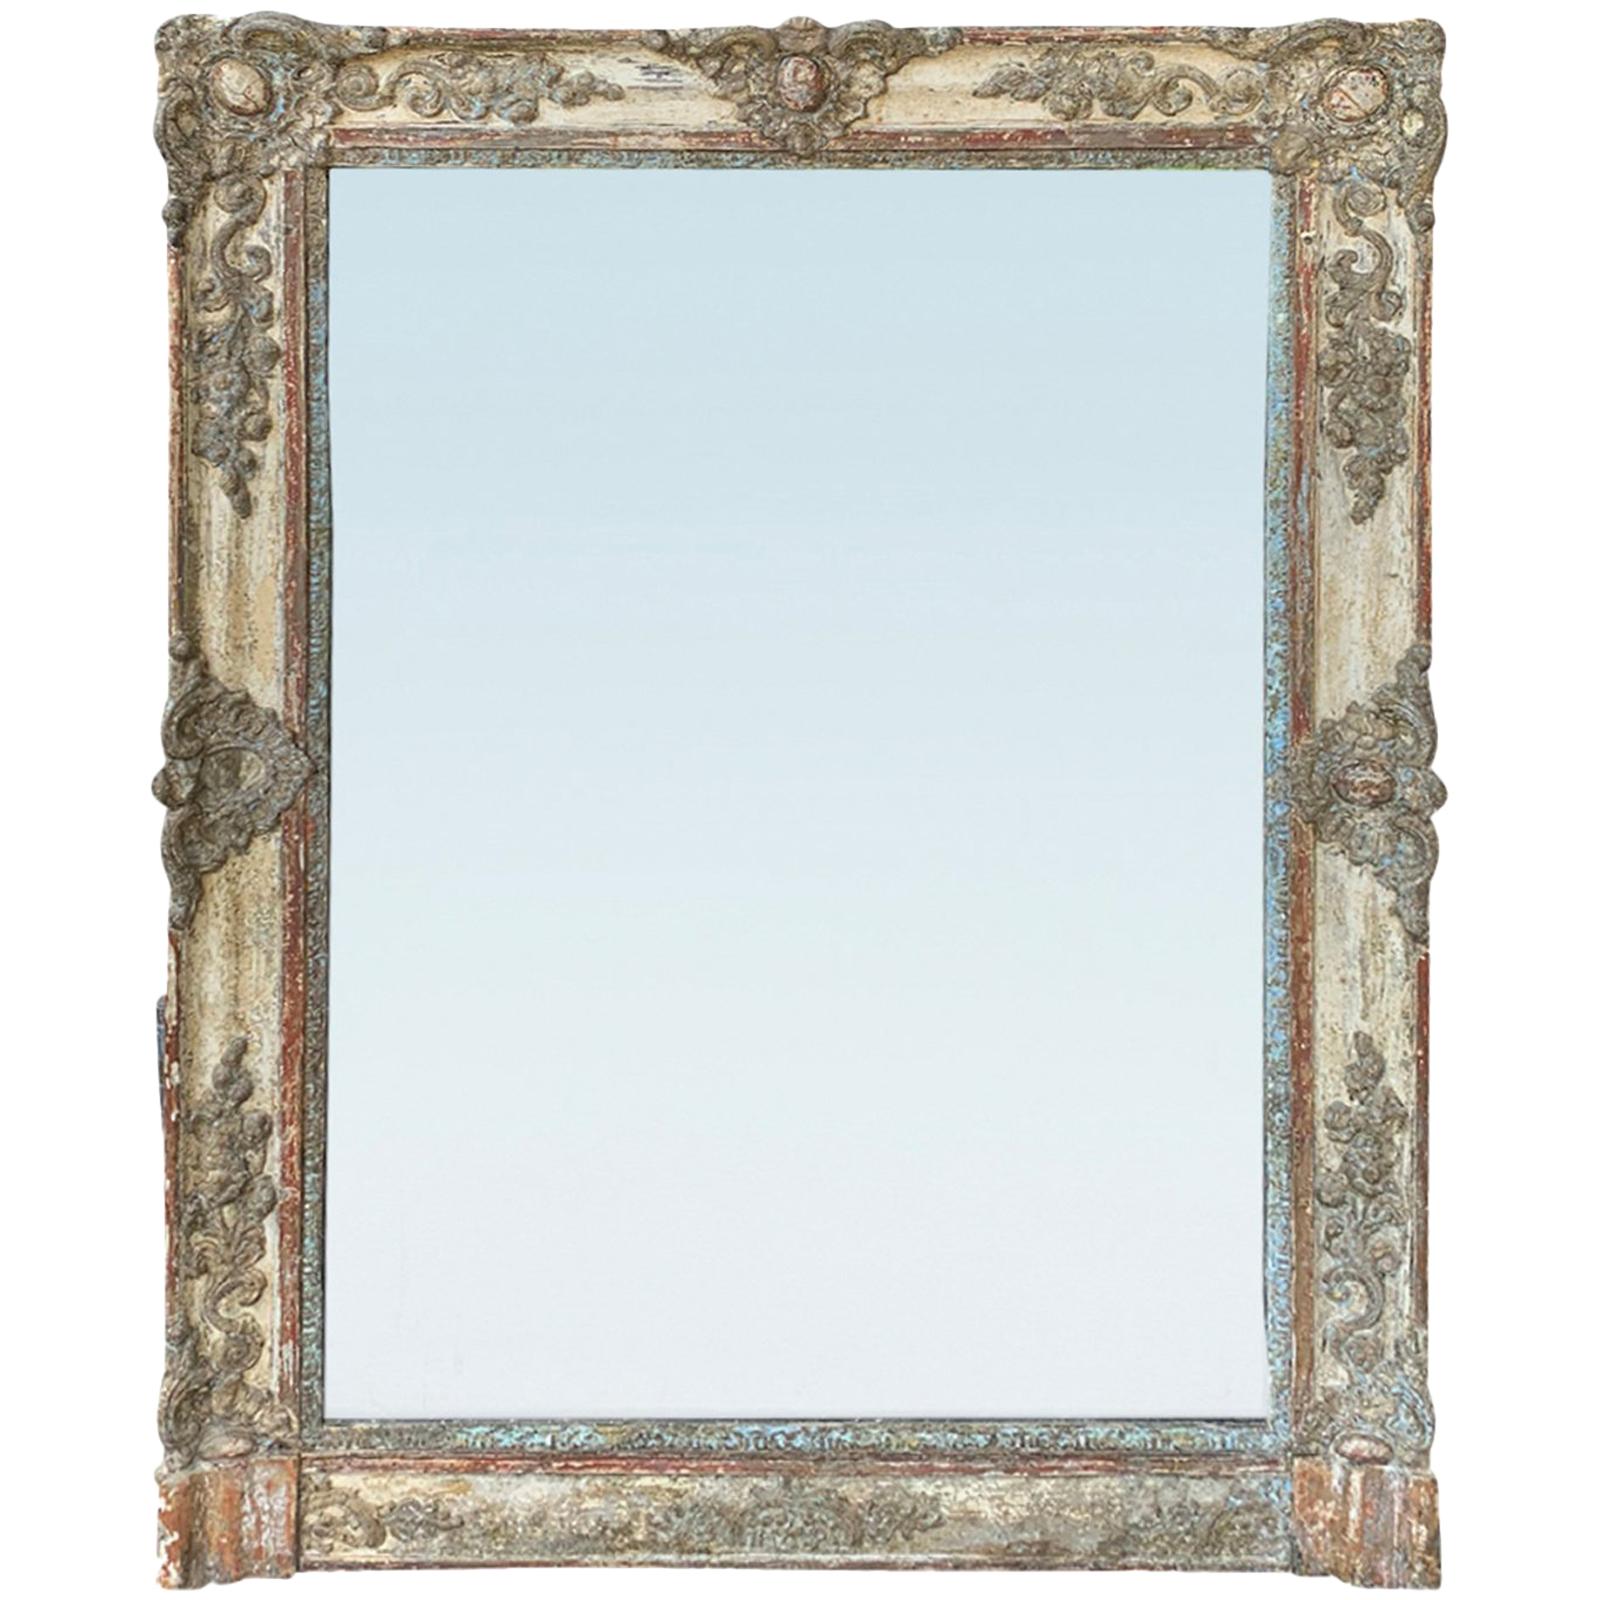 19th Century Regence Style Mirror with Wonderful Old Finish